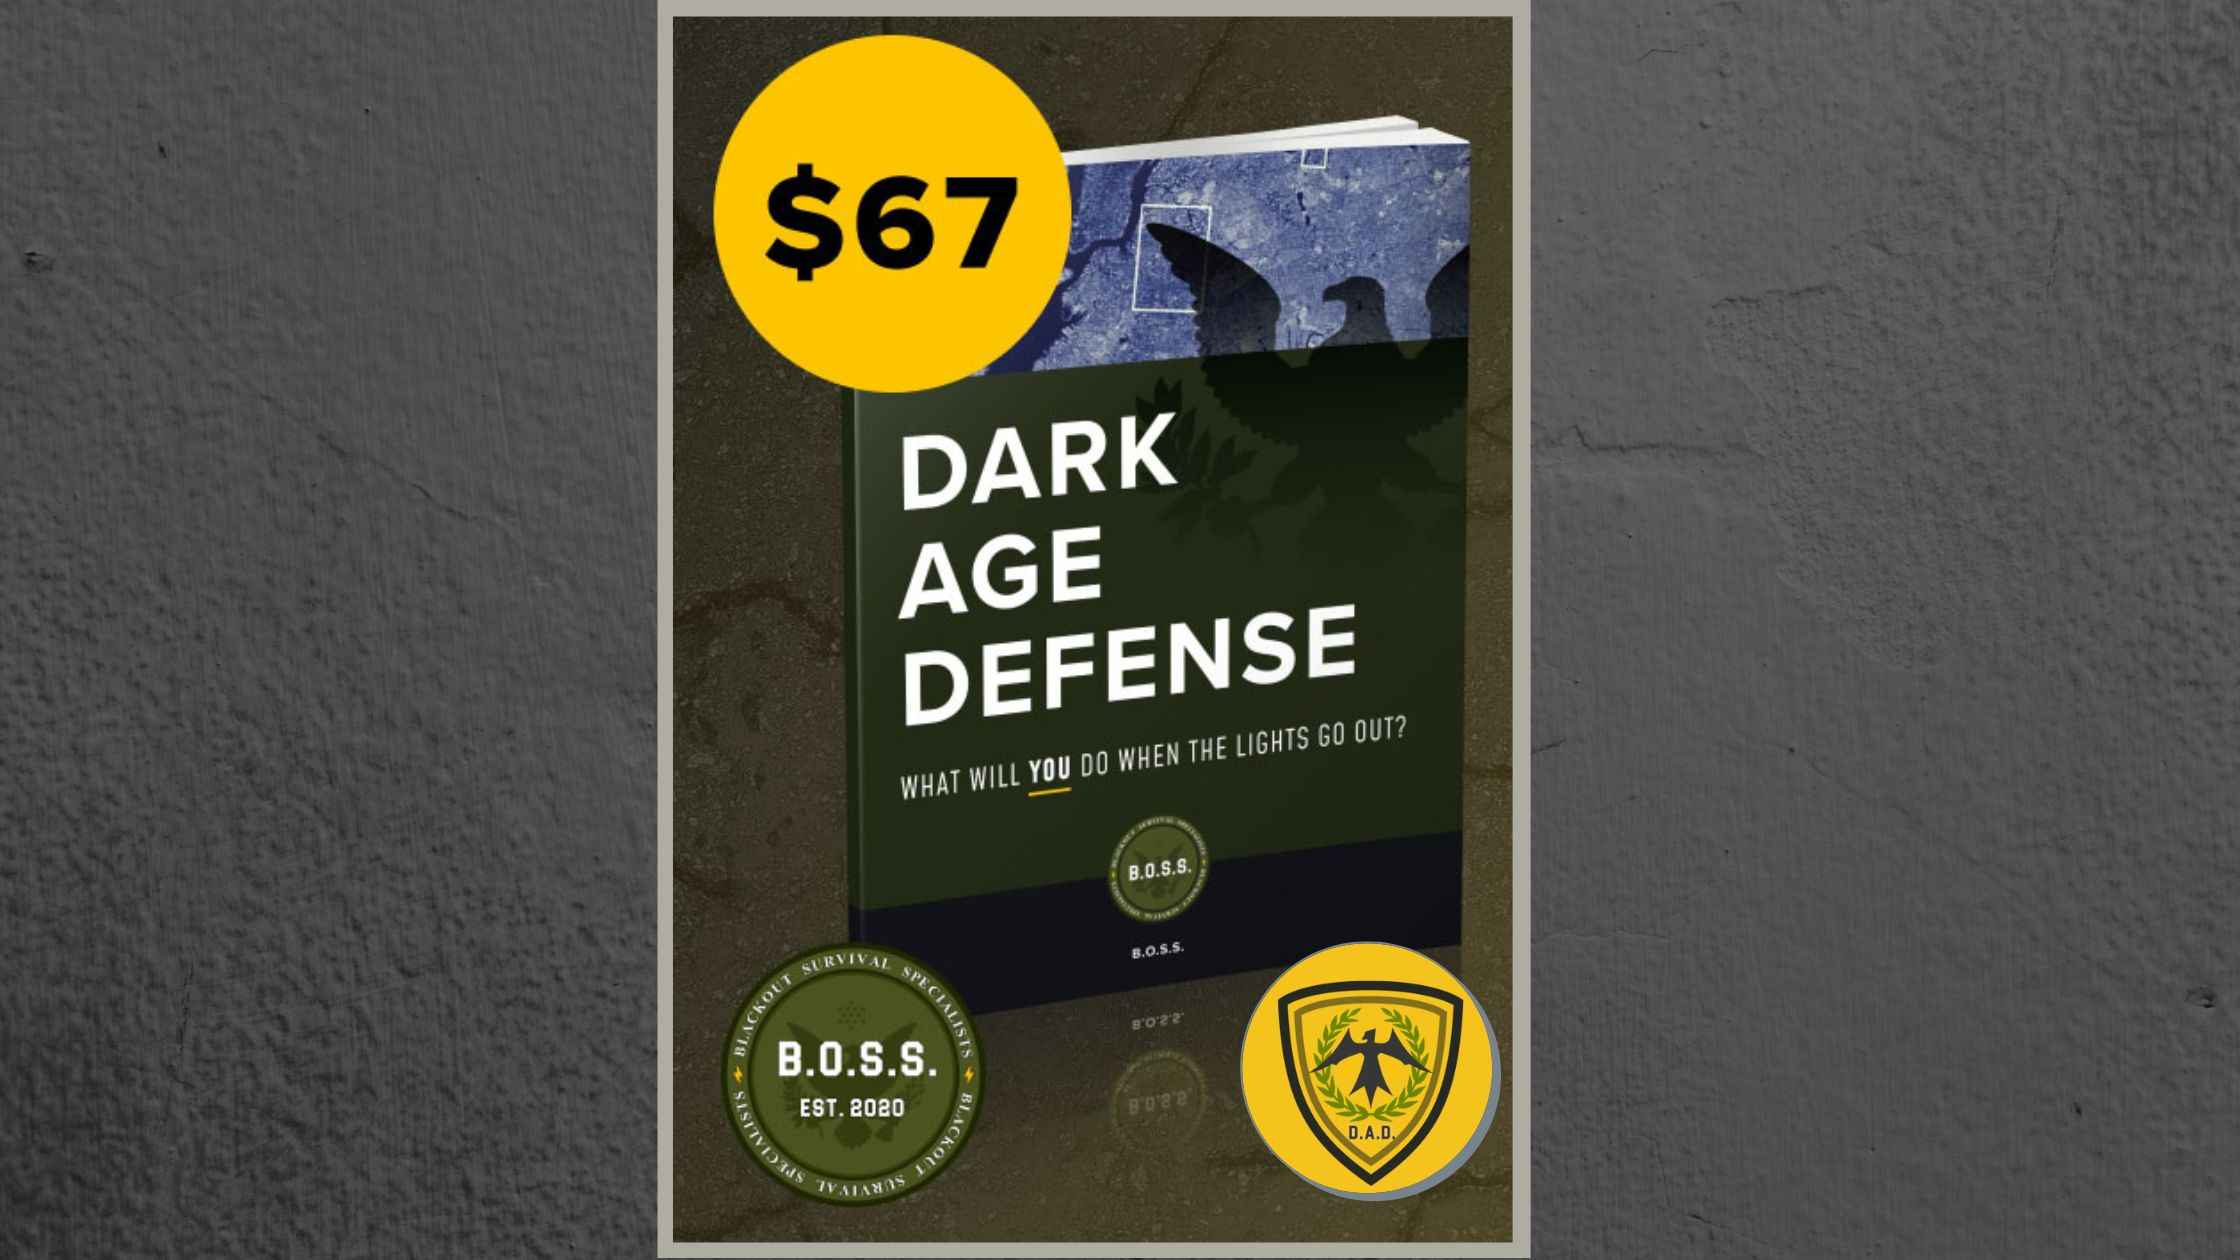 Dark Age Defense Pricing